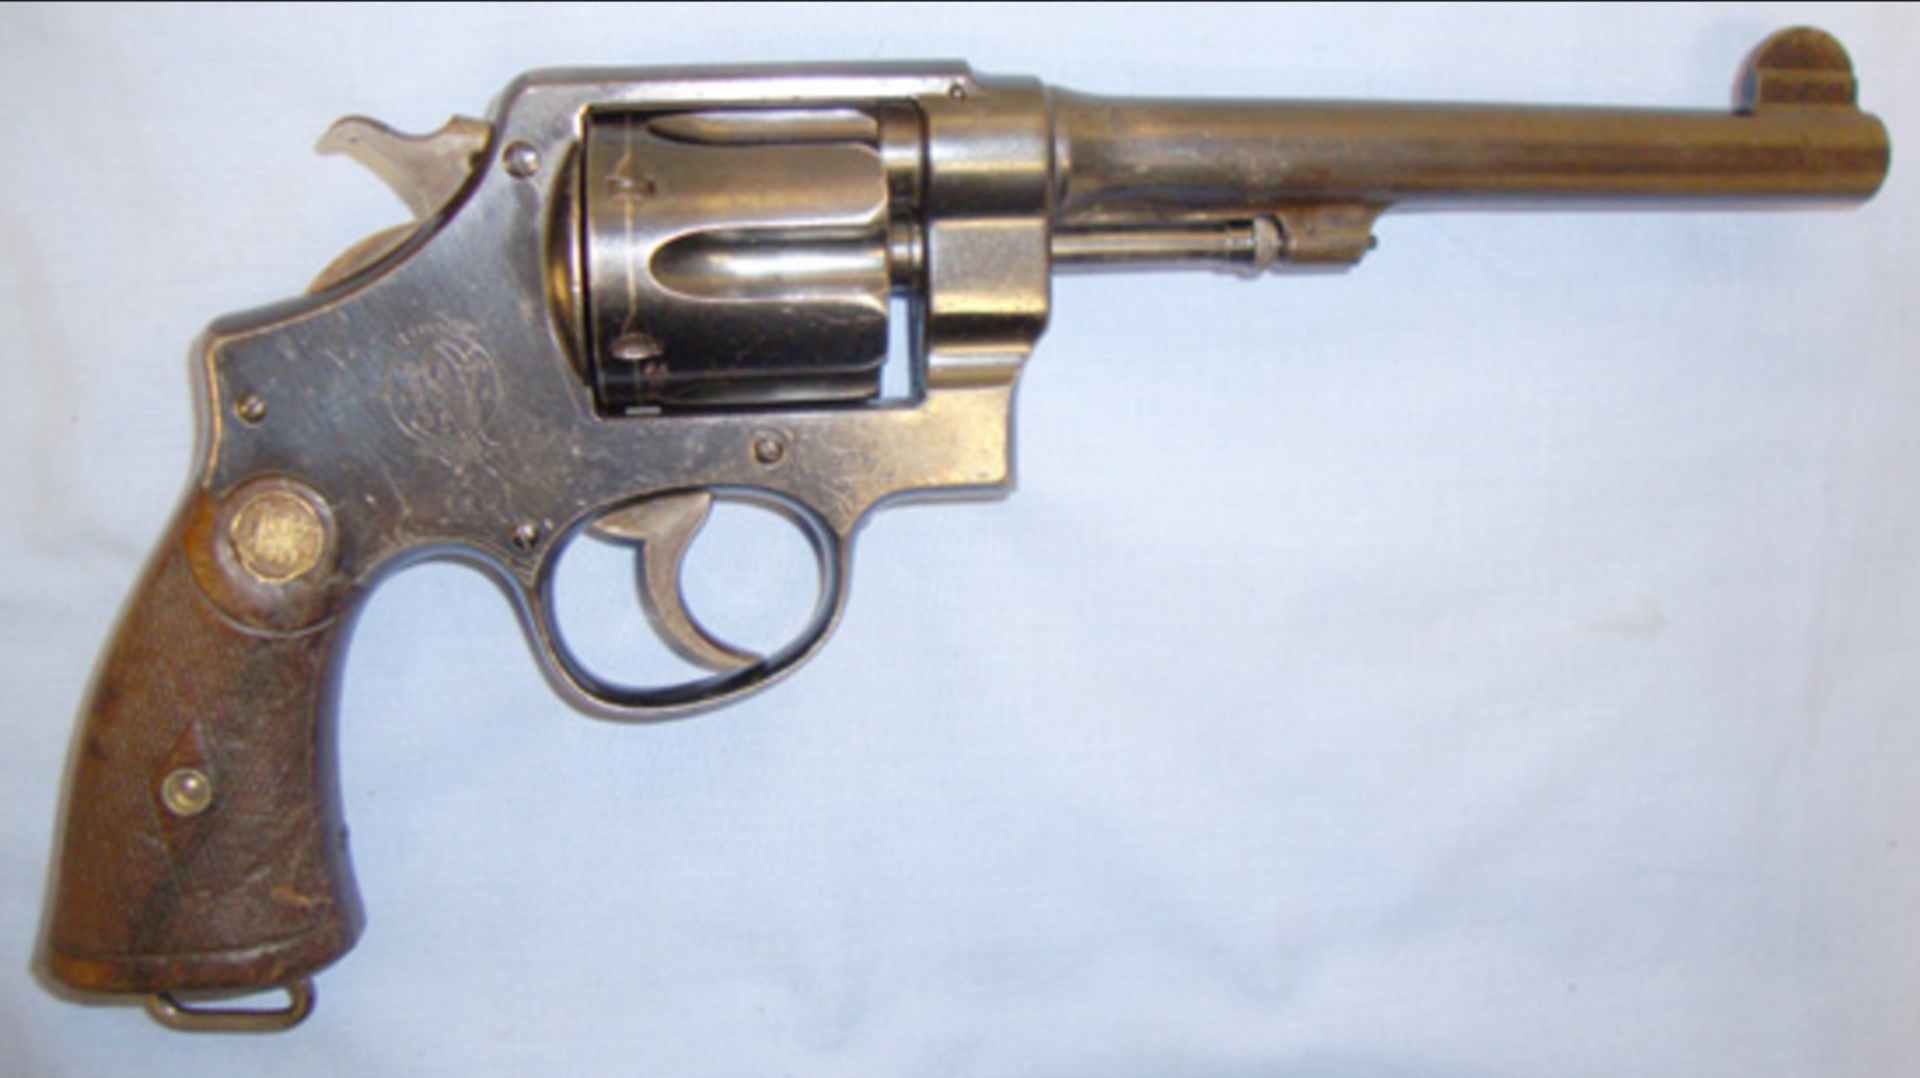 WW1 British Issue, U.S.A Made Smith & Wesson Officer's .455 Calibre Service Revolver